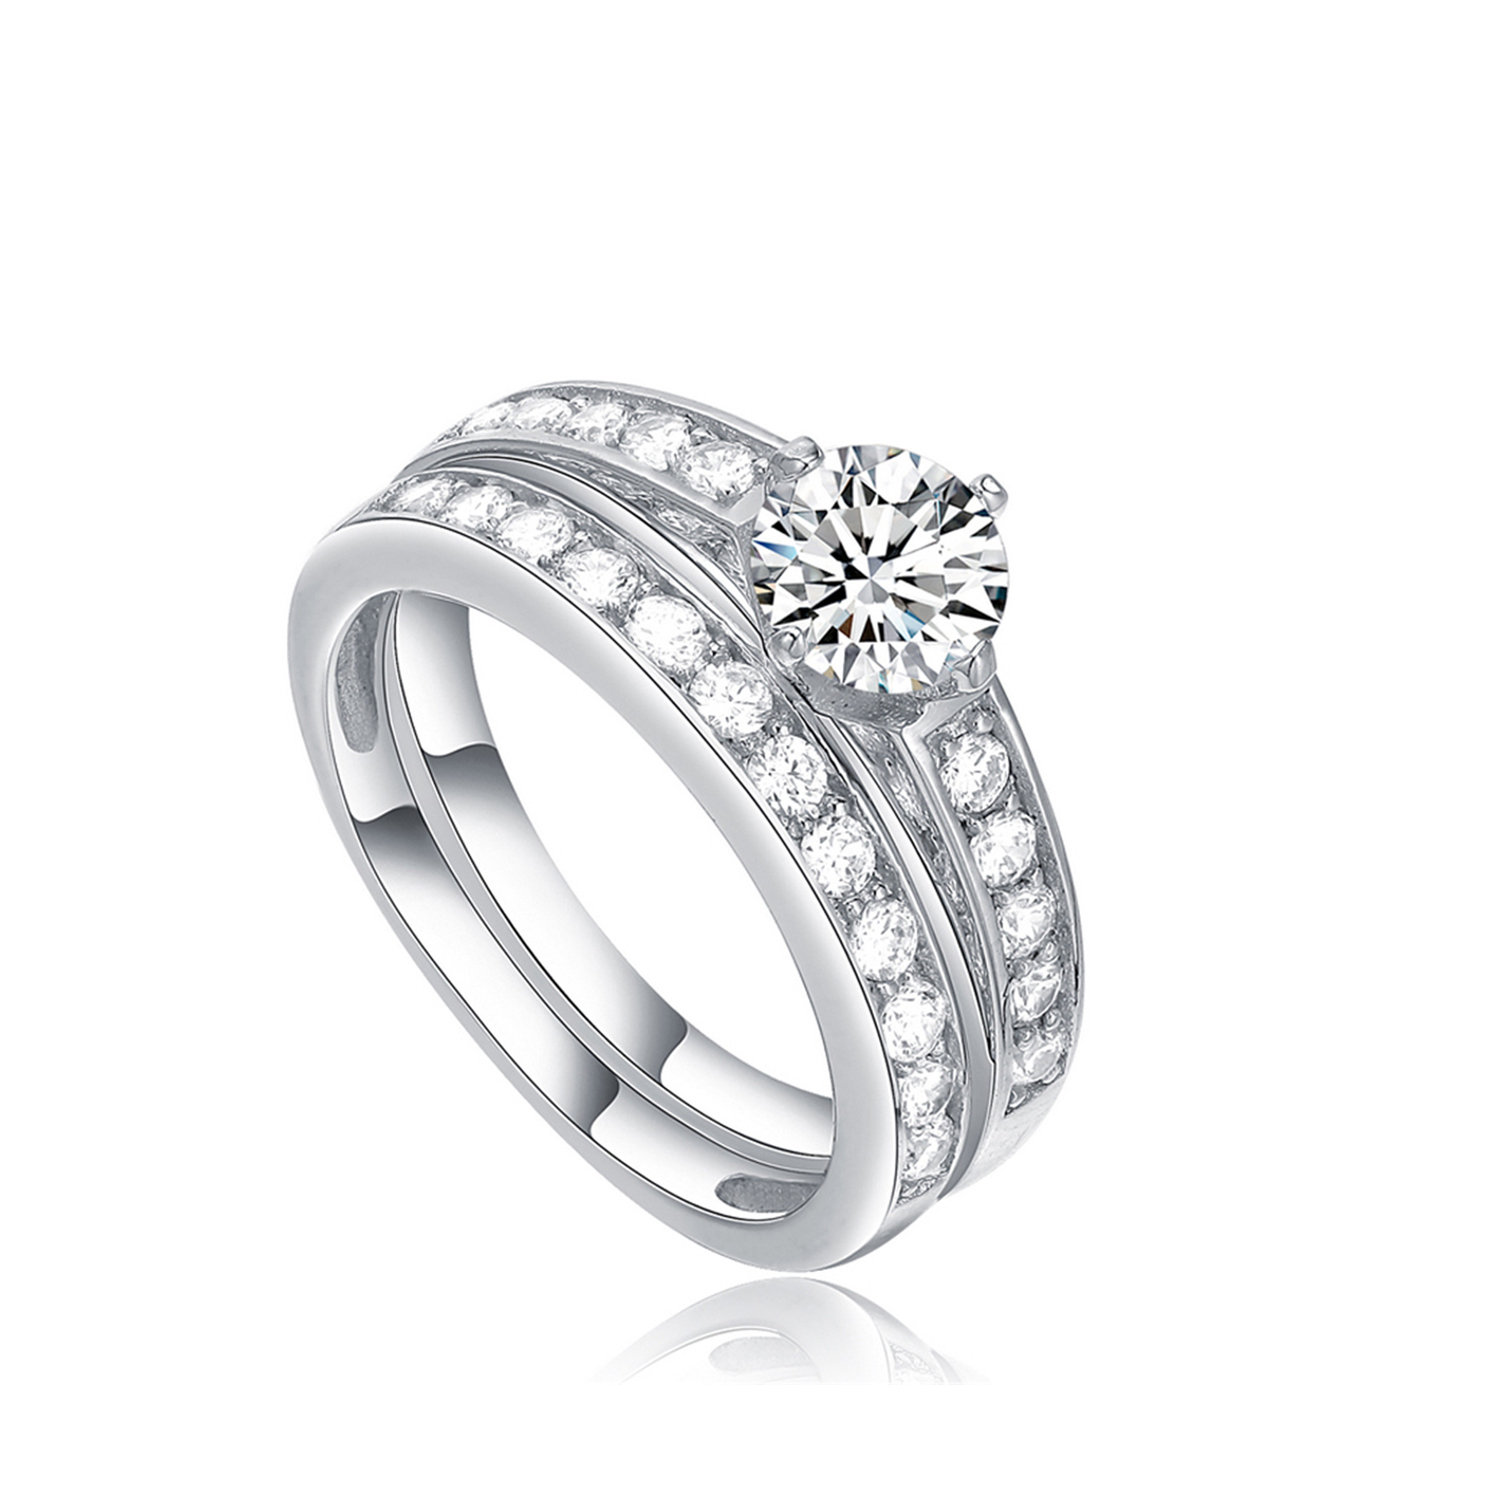 Wedding Engagement Rings Eternity Silver Finger Design 925 Sterling Silver Ring